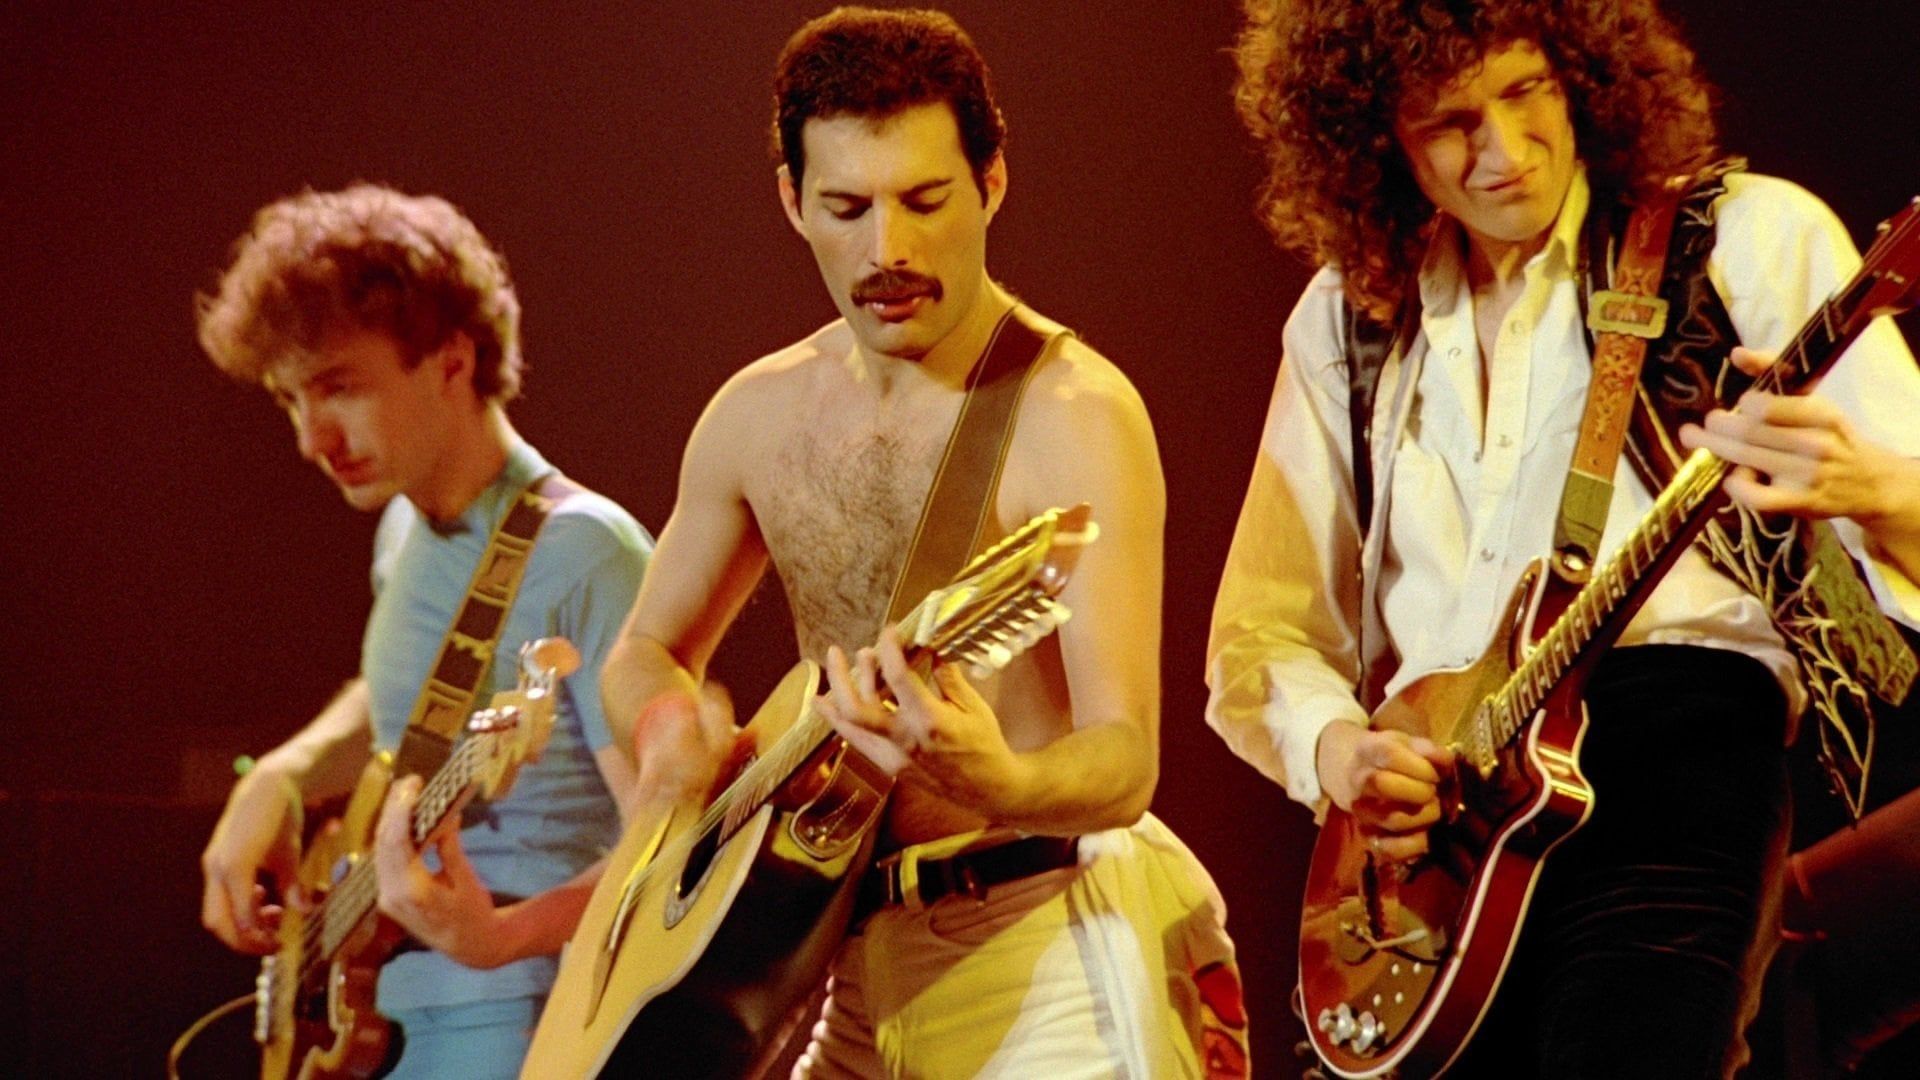 We Will Rock You: Queen Live in Concert background